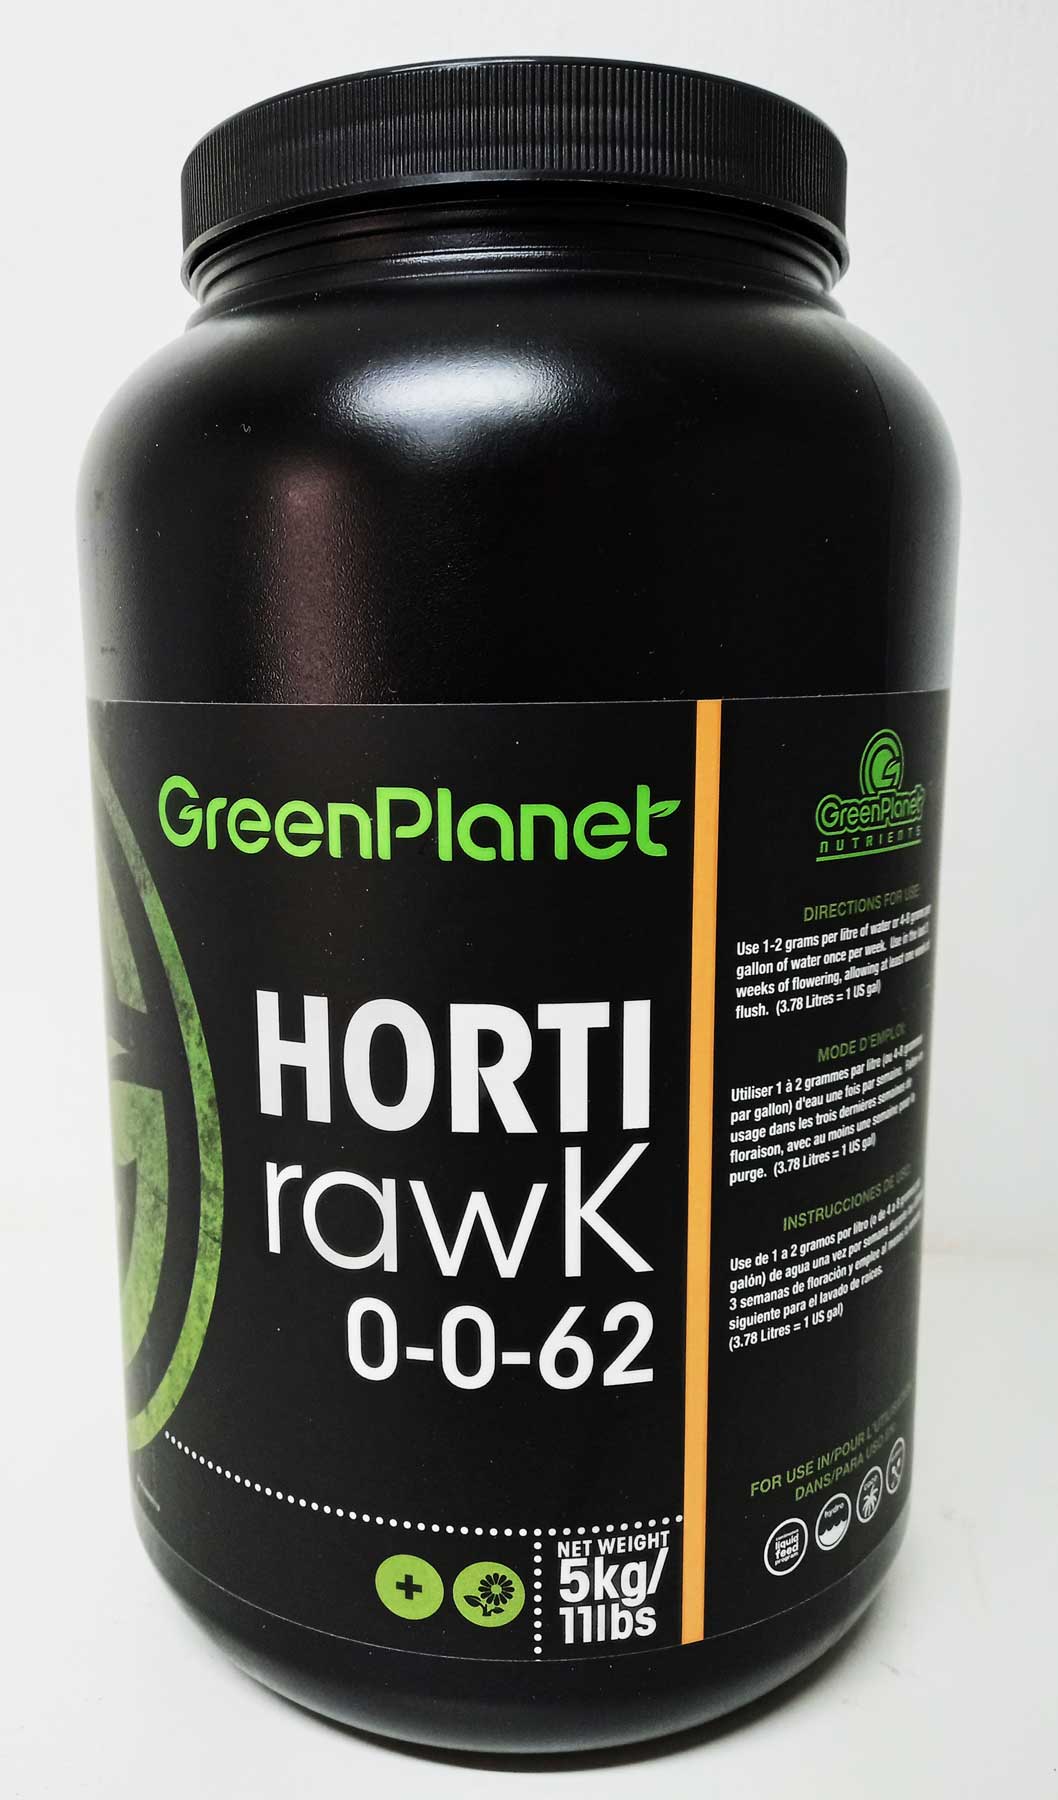 GreenPlanet HORTI rawK 5 kg